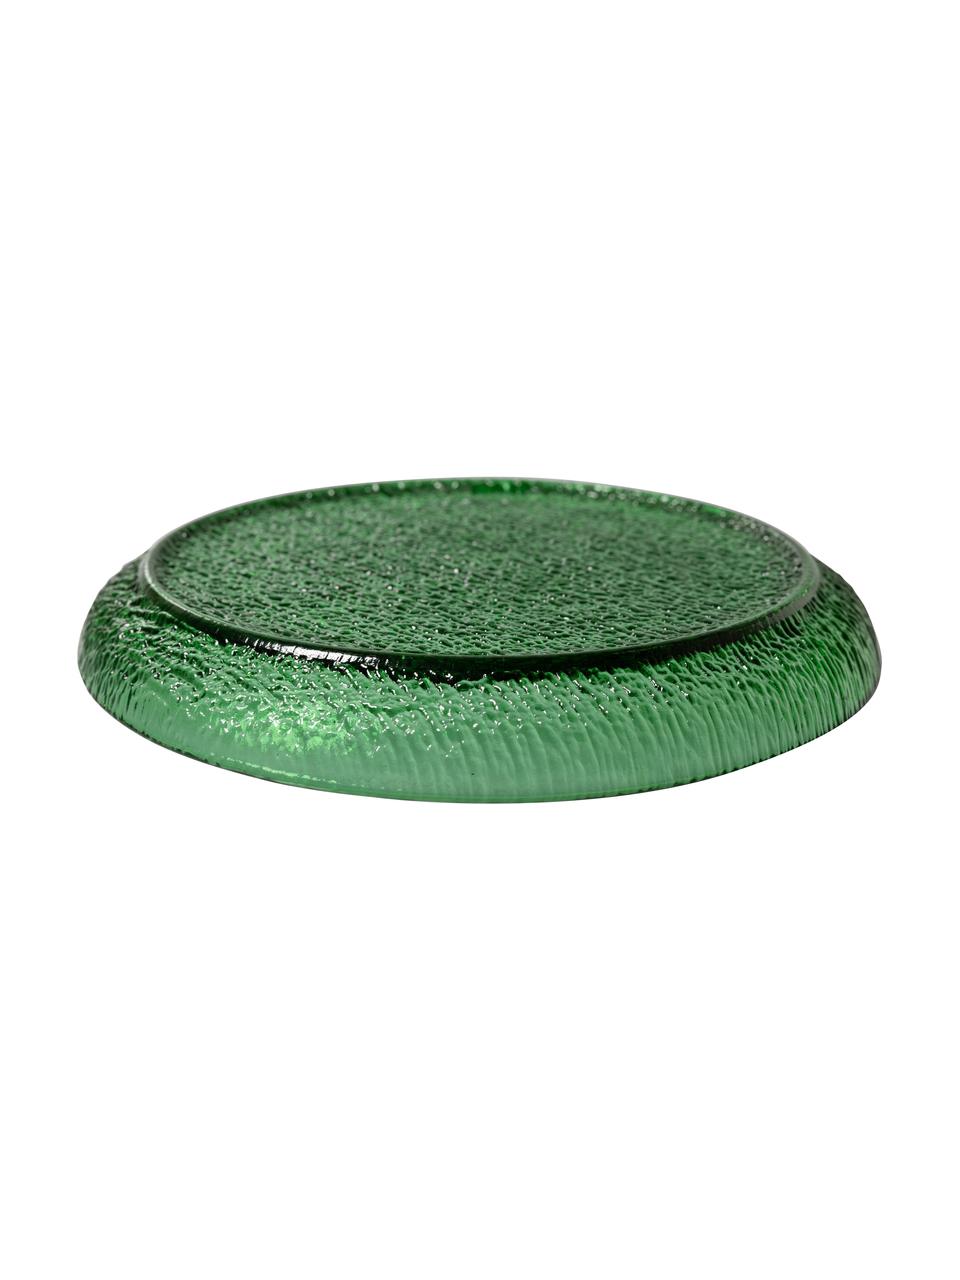 Frühstucksteller The Emeralds aus Glas in Grün, 2 Stück, Glas, Grün, Ø 21